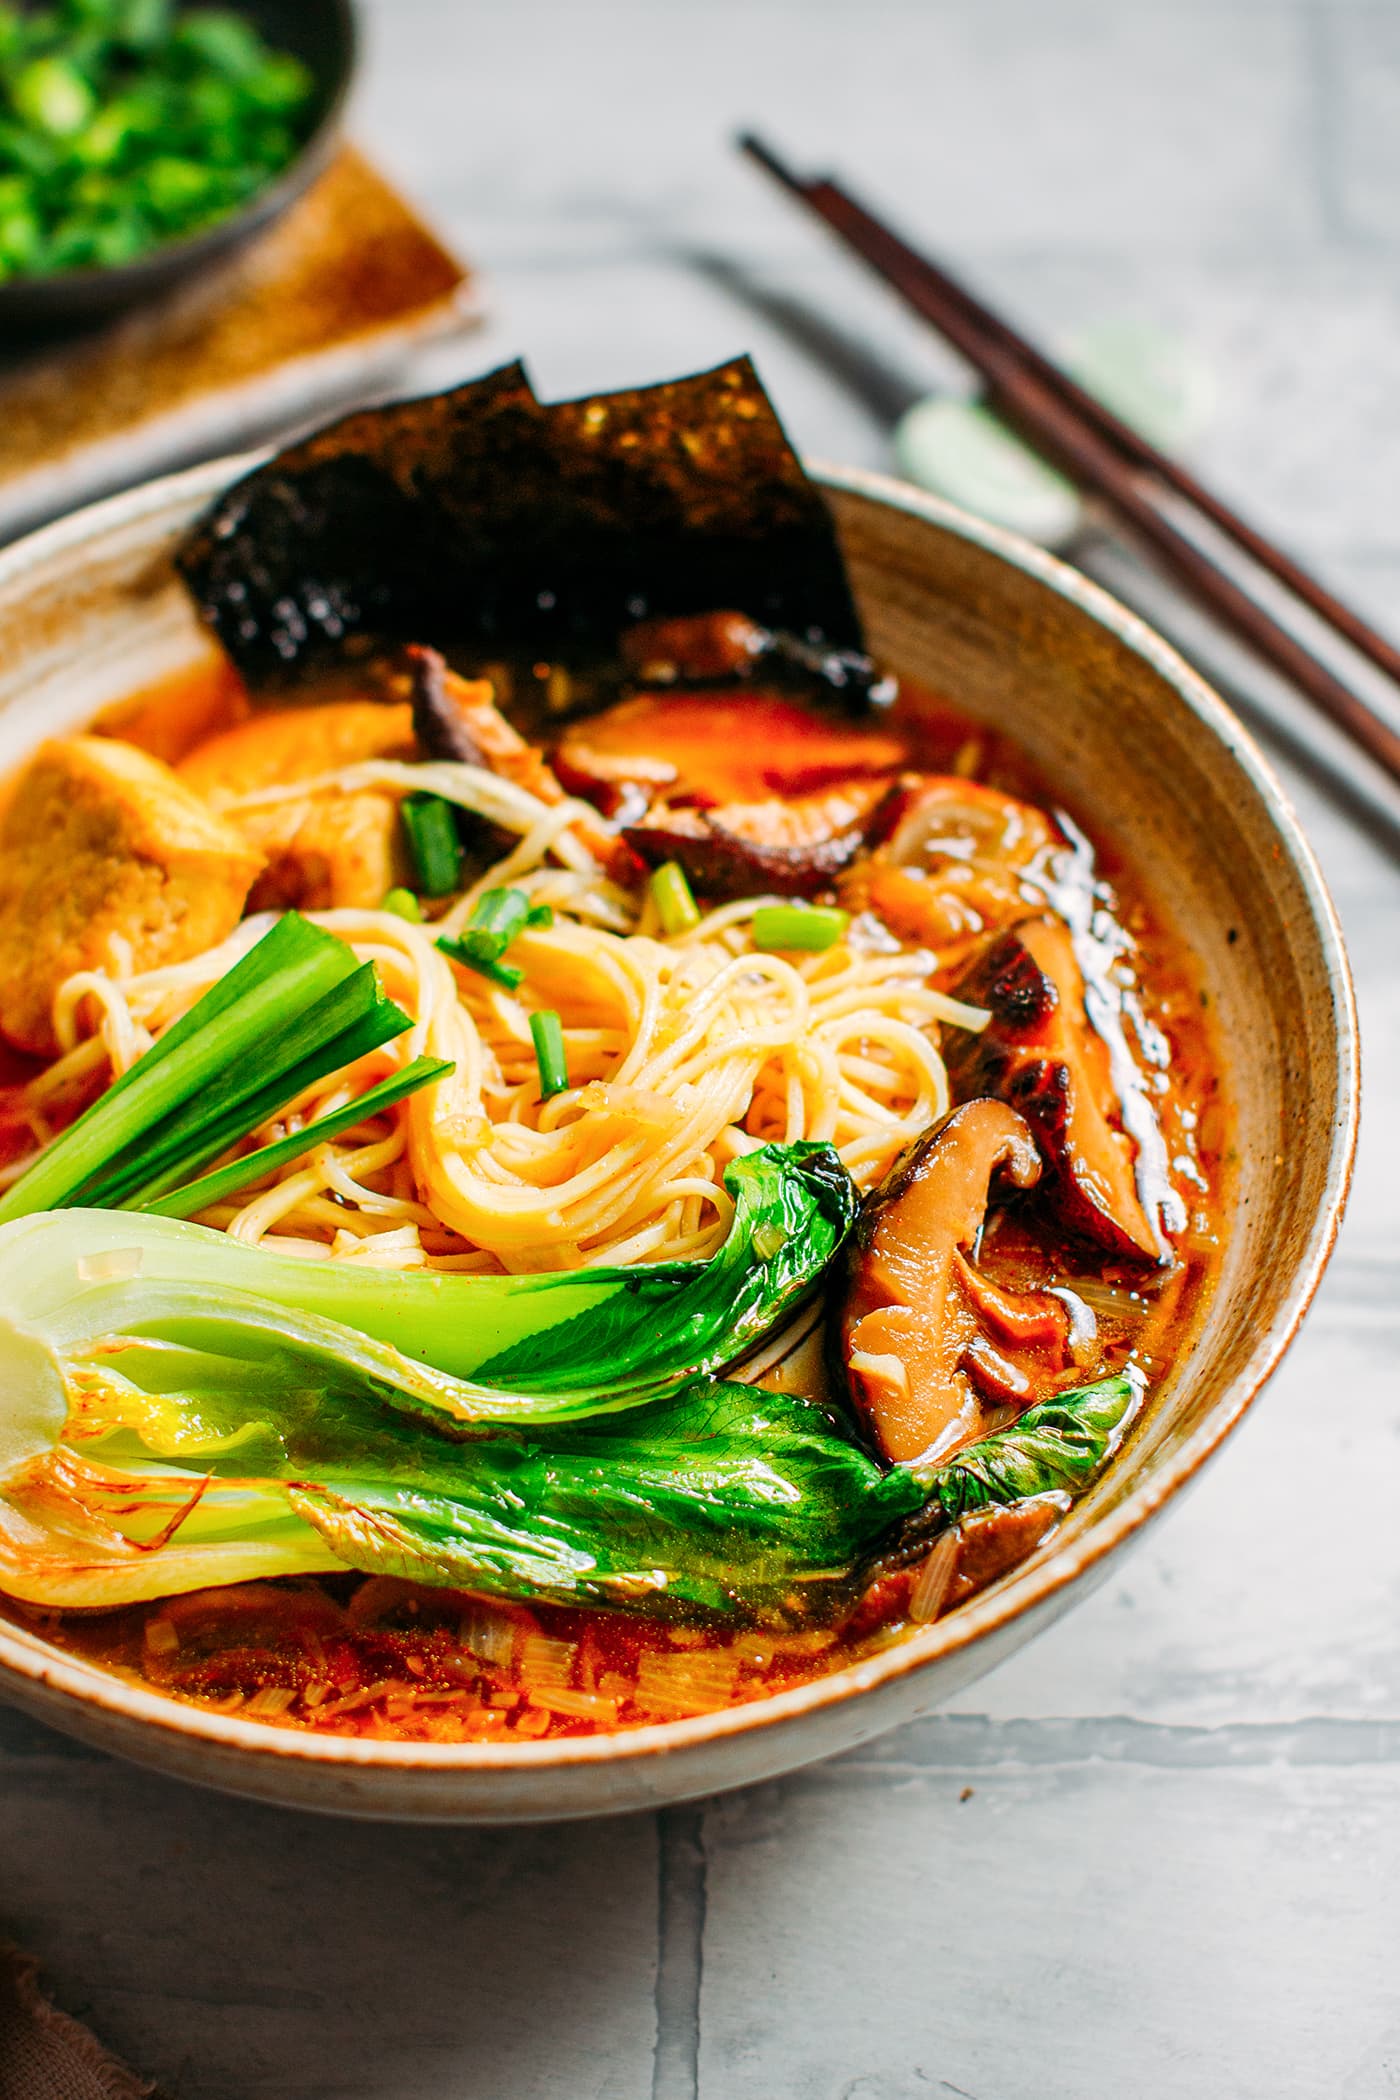 Vegan ramen with noodles, mushrooms, and pak choi